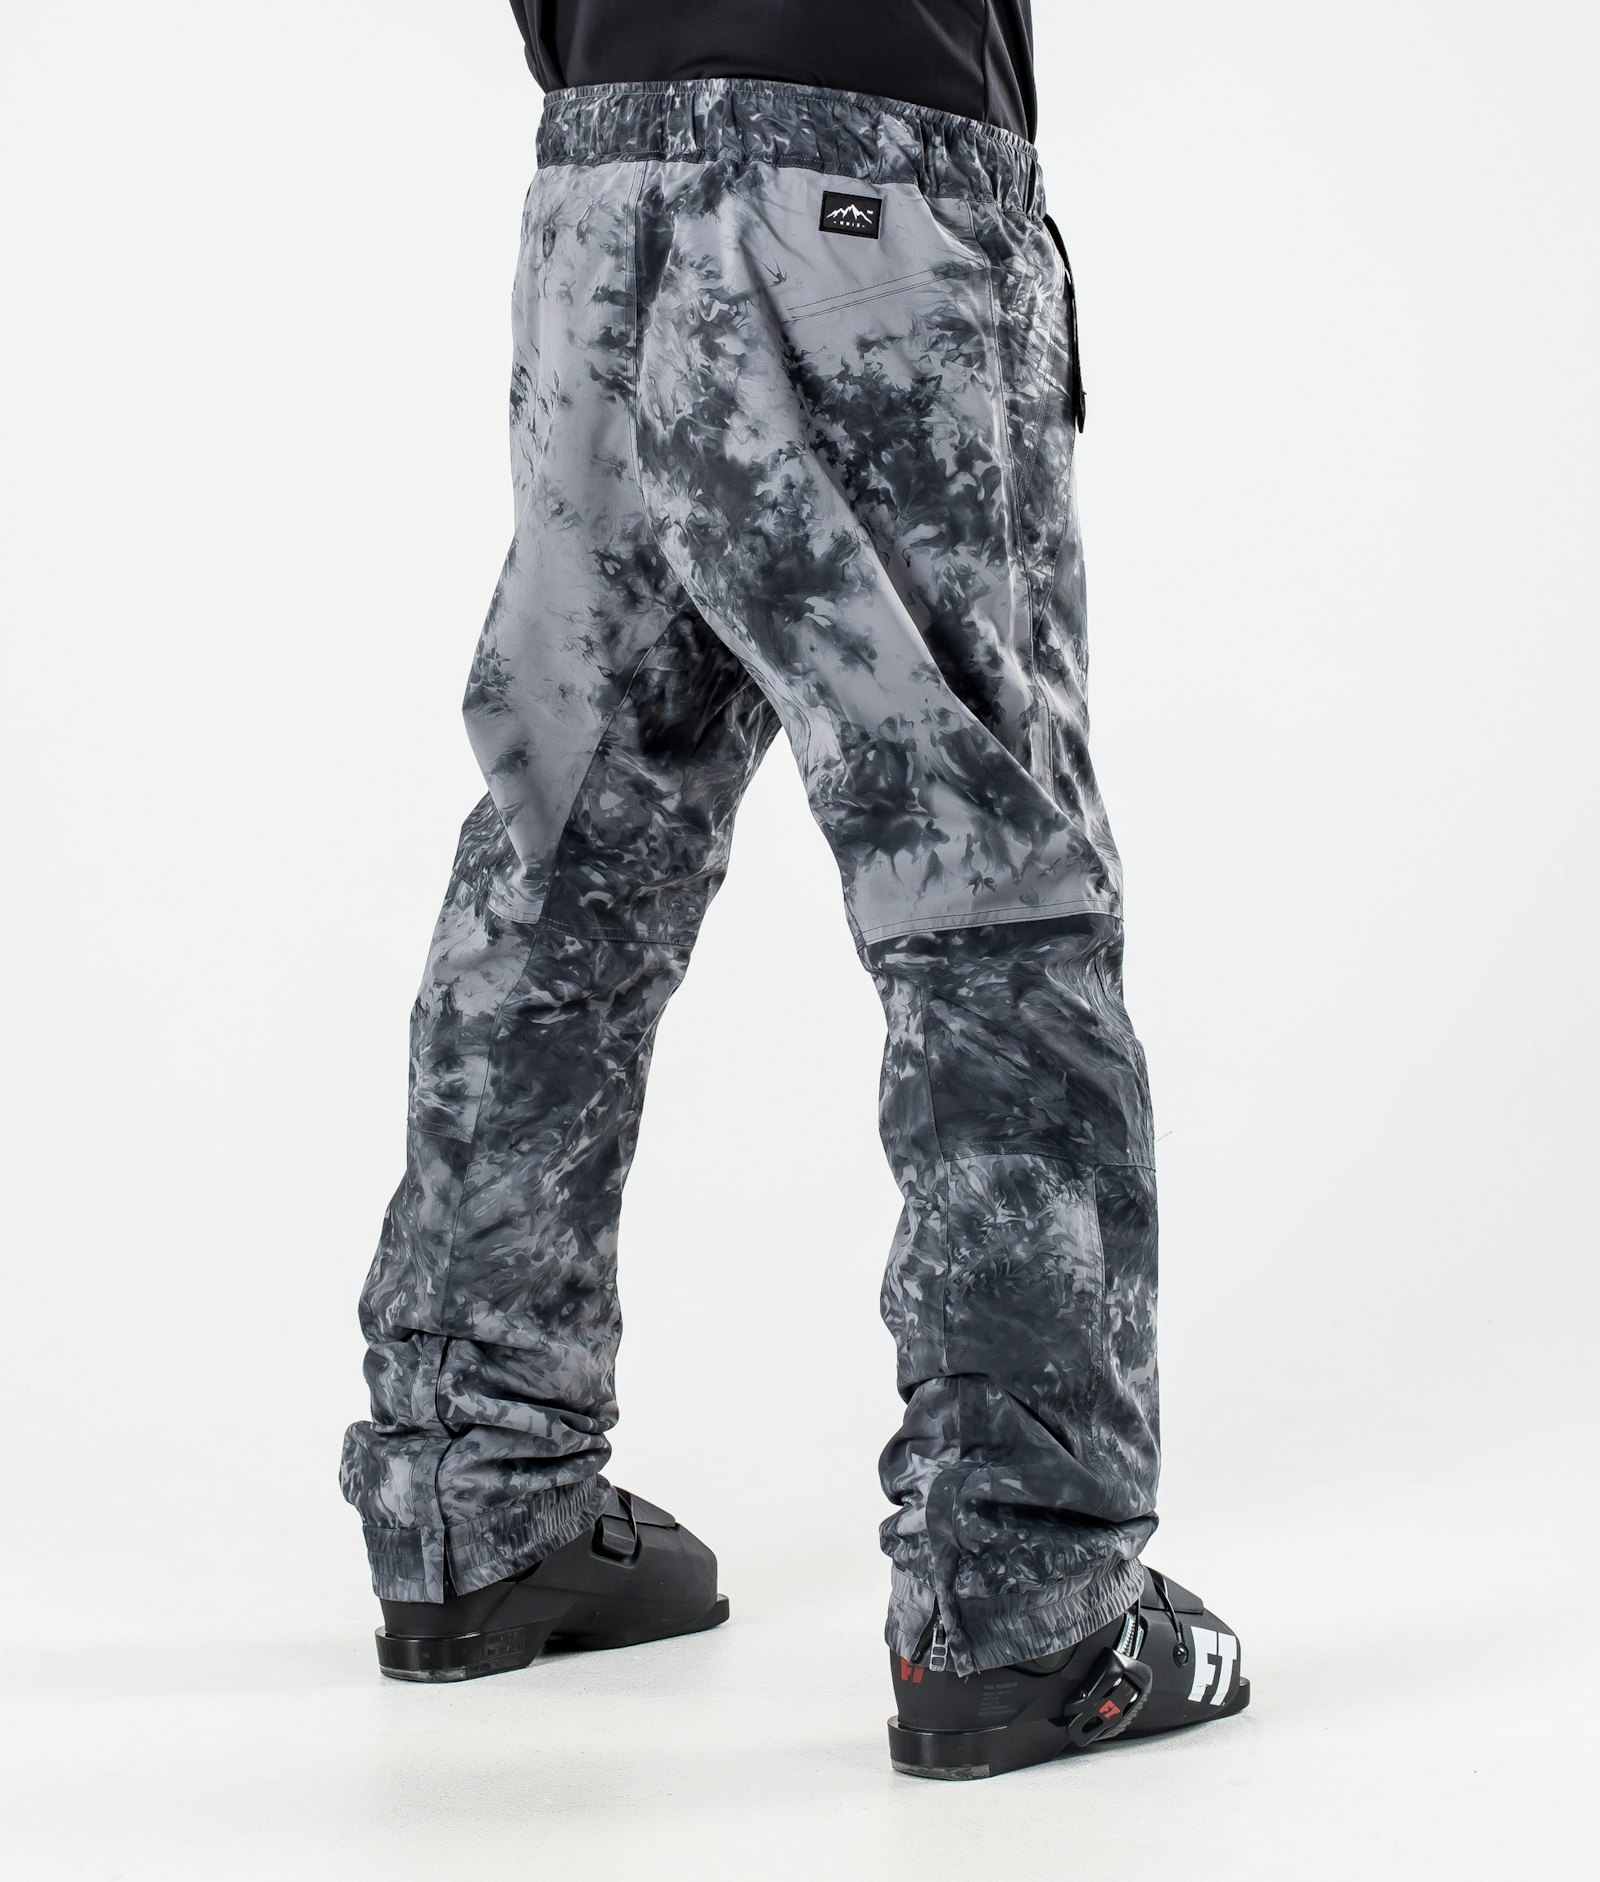 Blizzard 2020 Pantalon de Ski Homme Limited Edition Tiedye